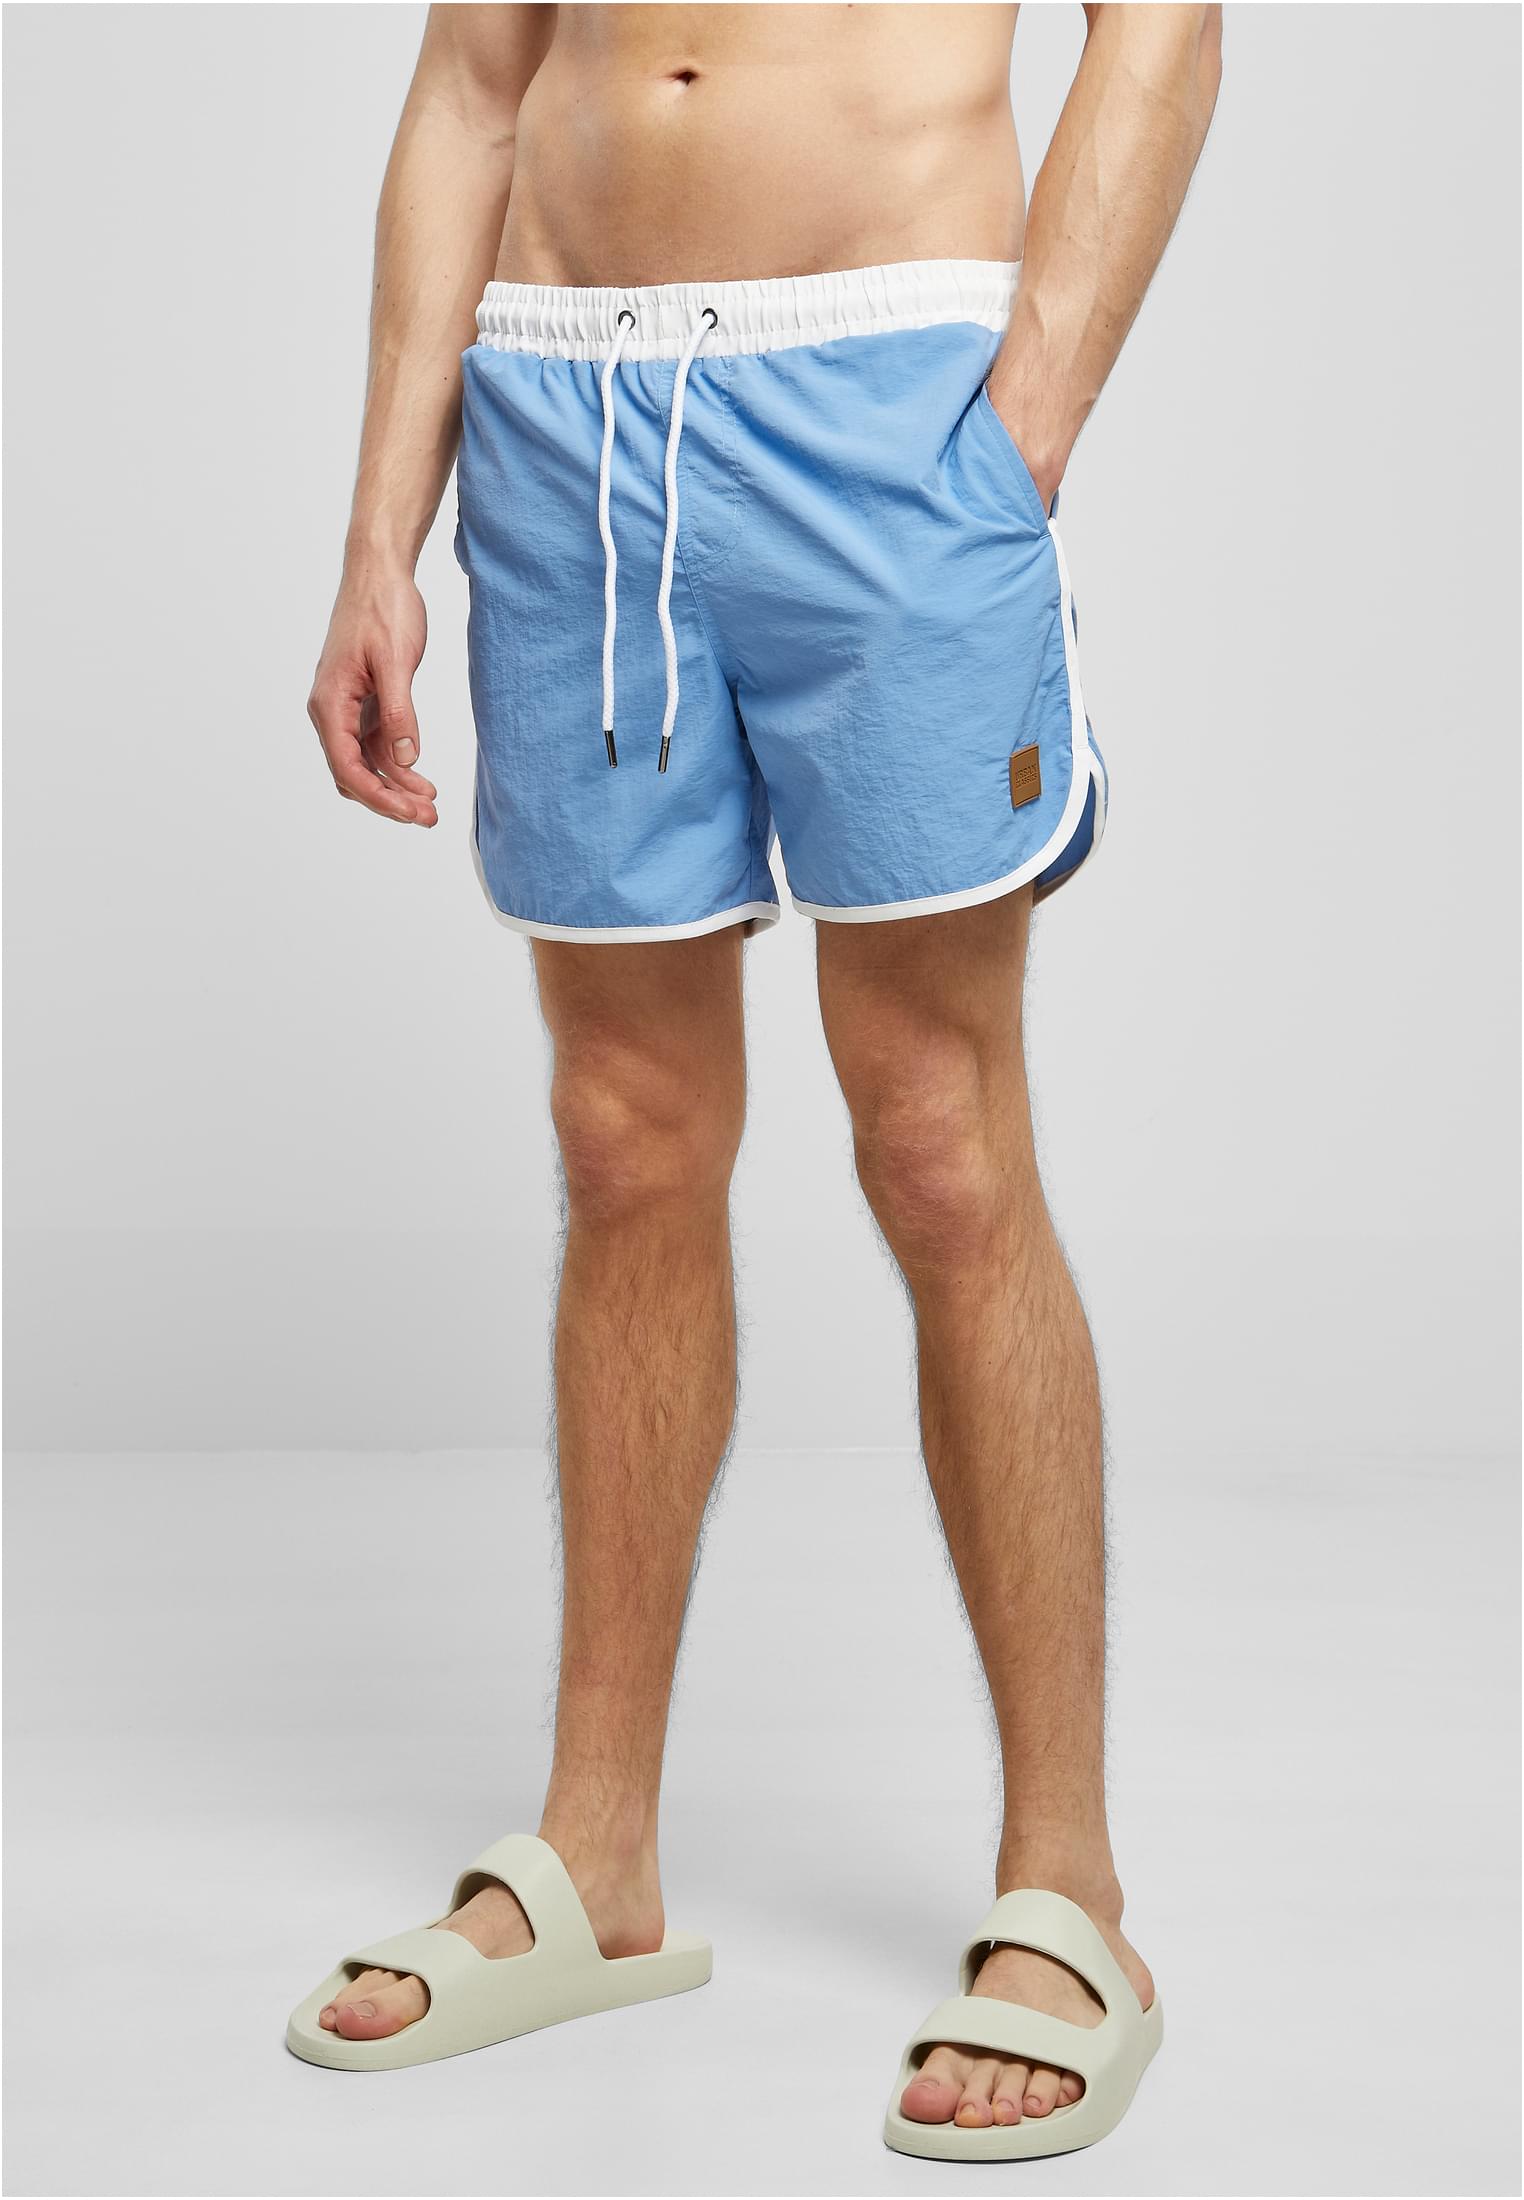 Retro swimsuit white/horizontal blue